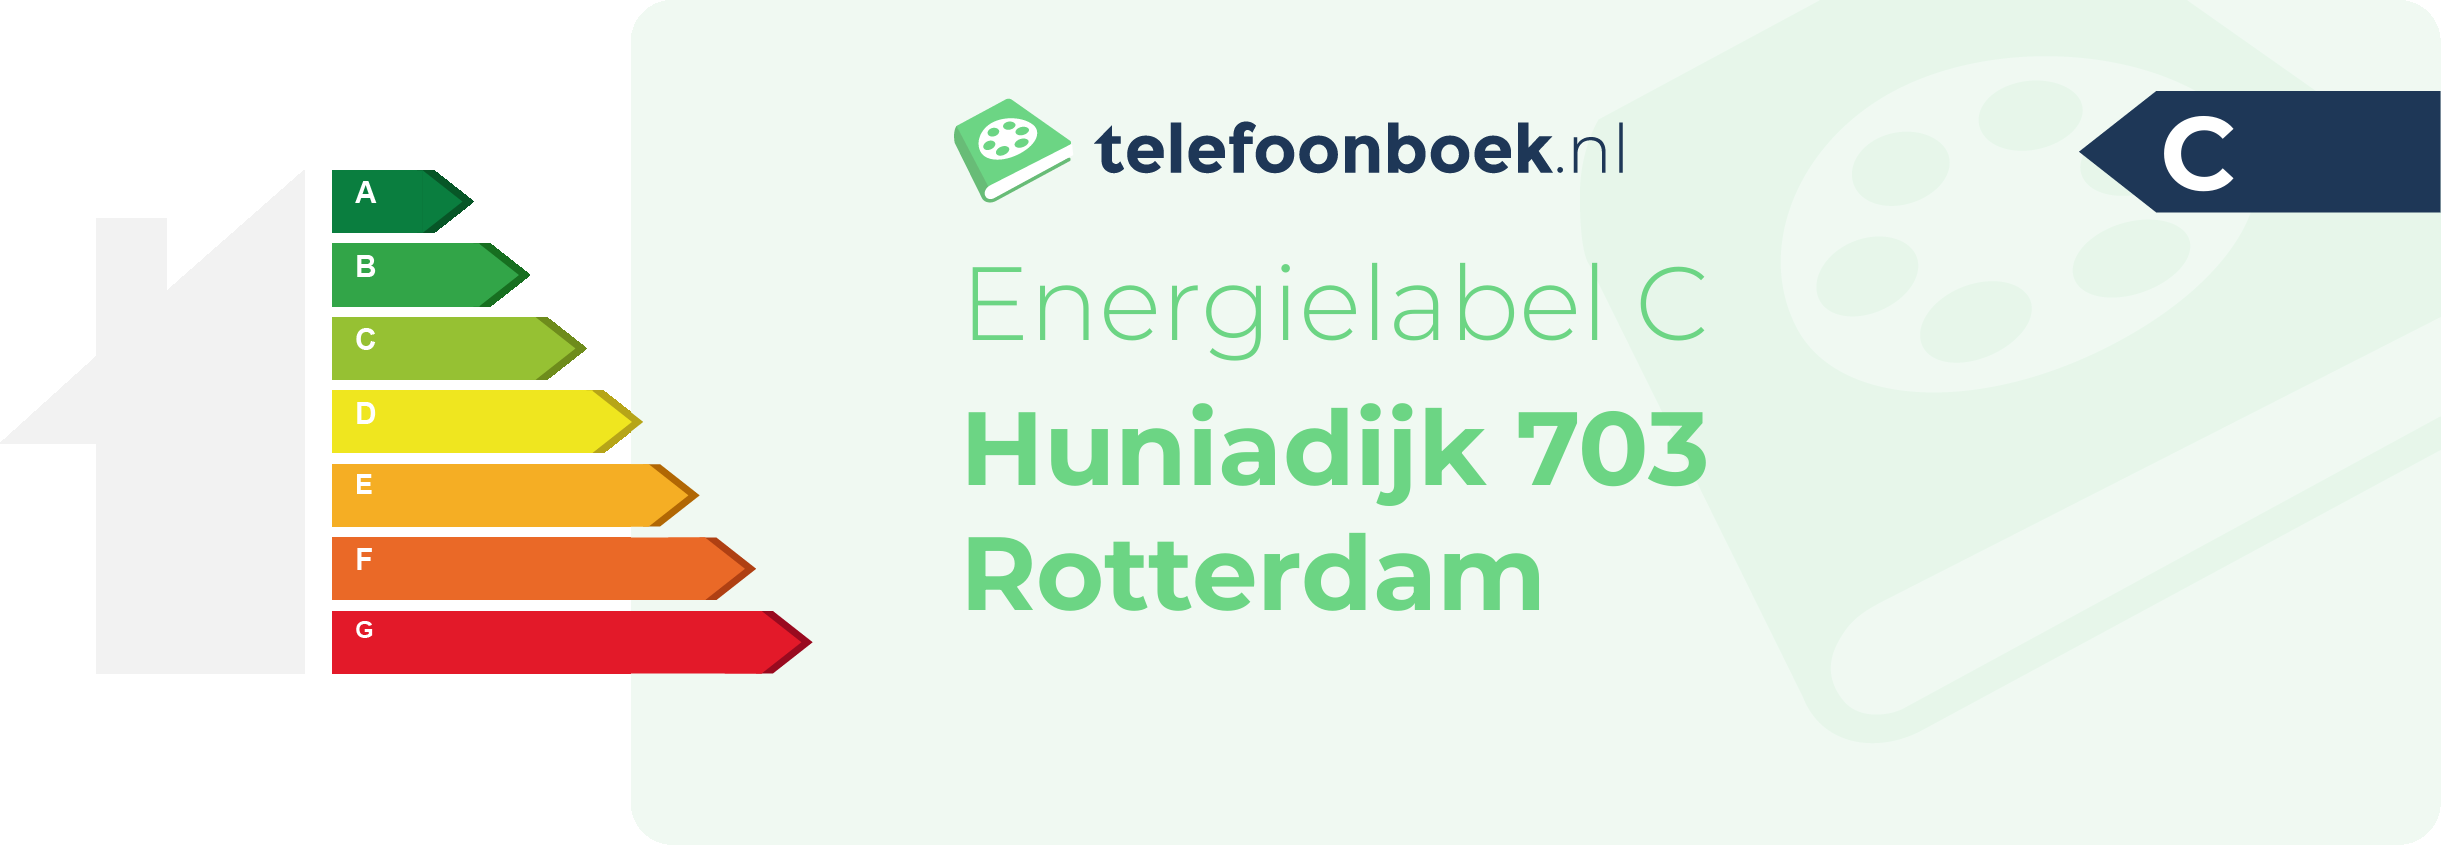 Energielabel Huniadijk 703 Rotterdam